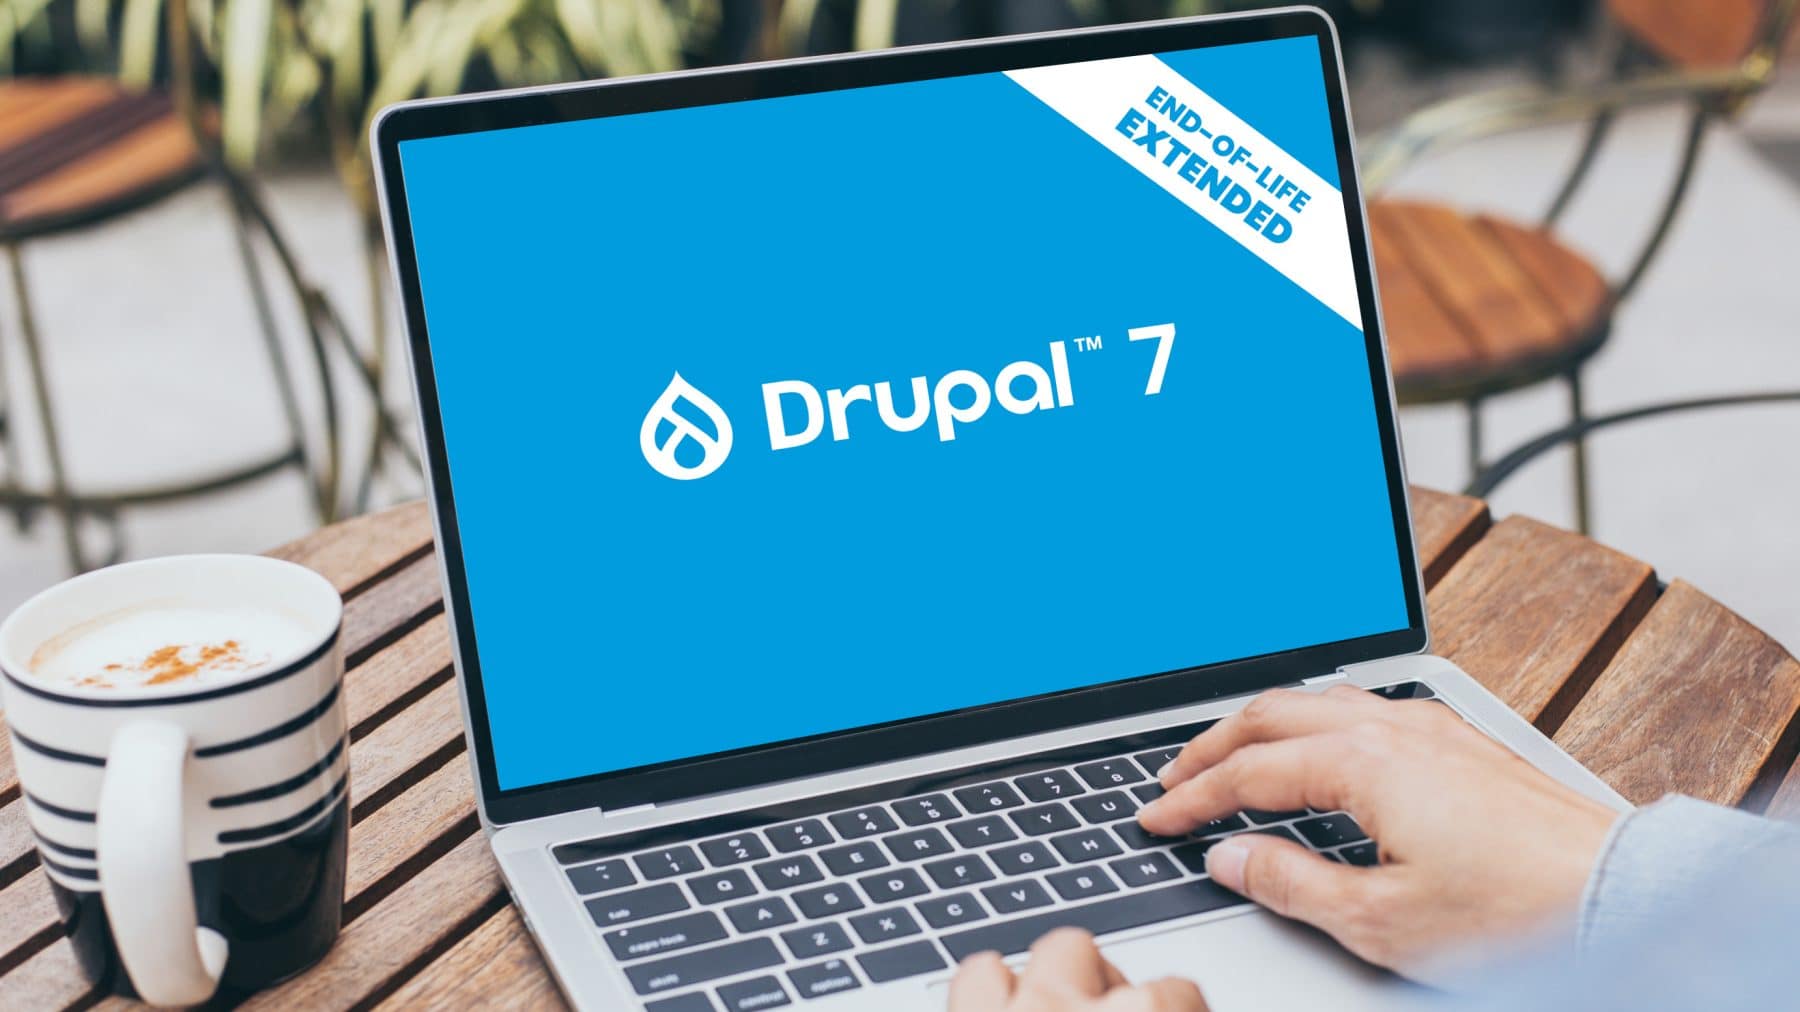 Drupal 7 End-of-Life Update Extended